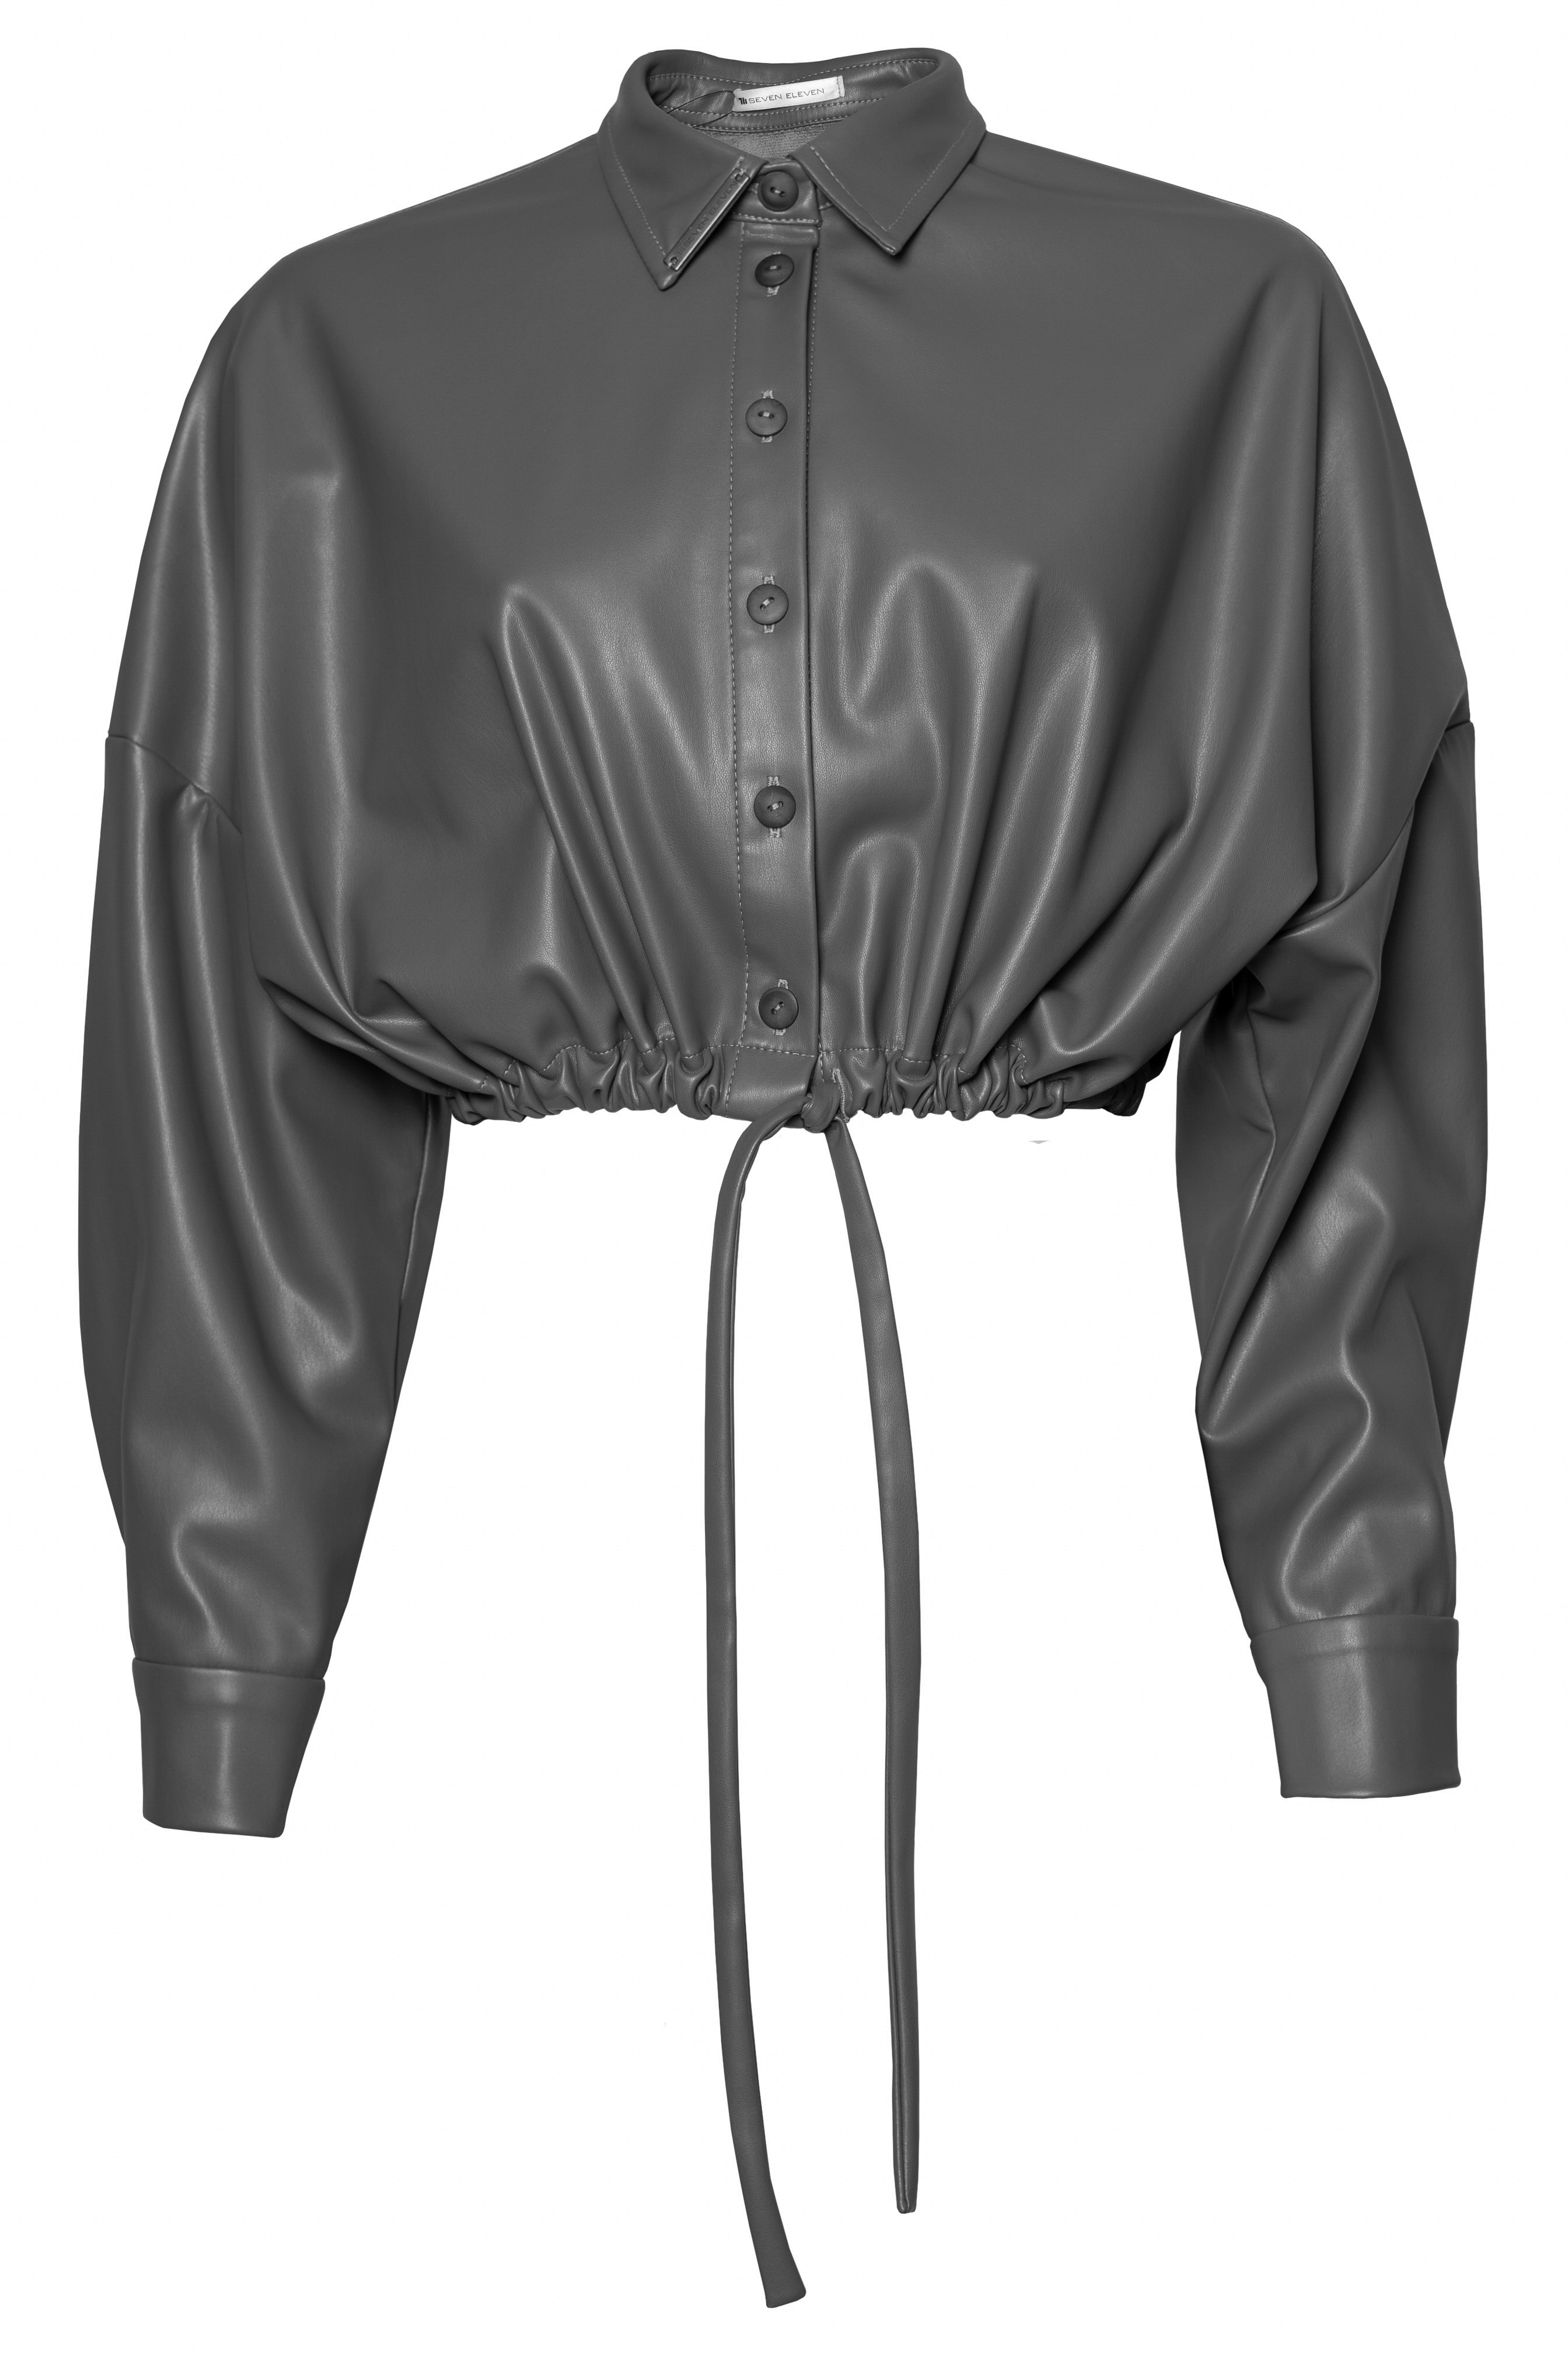 Vicia ecoleather jacket photo